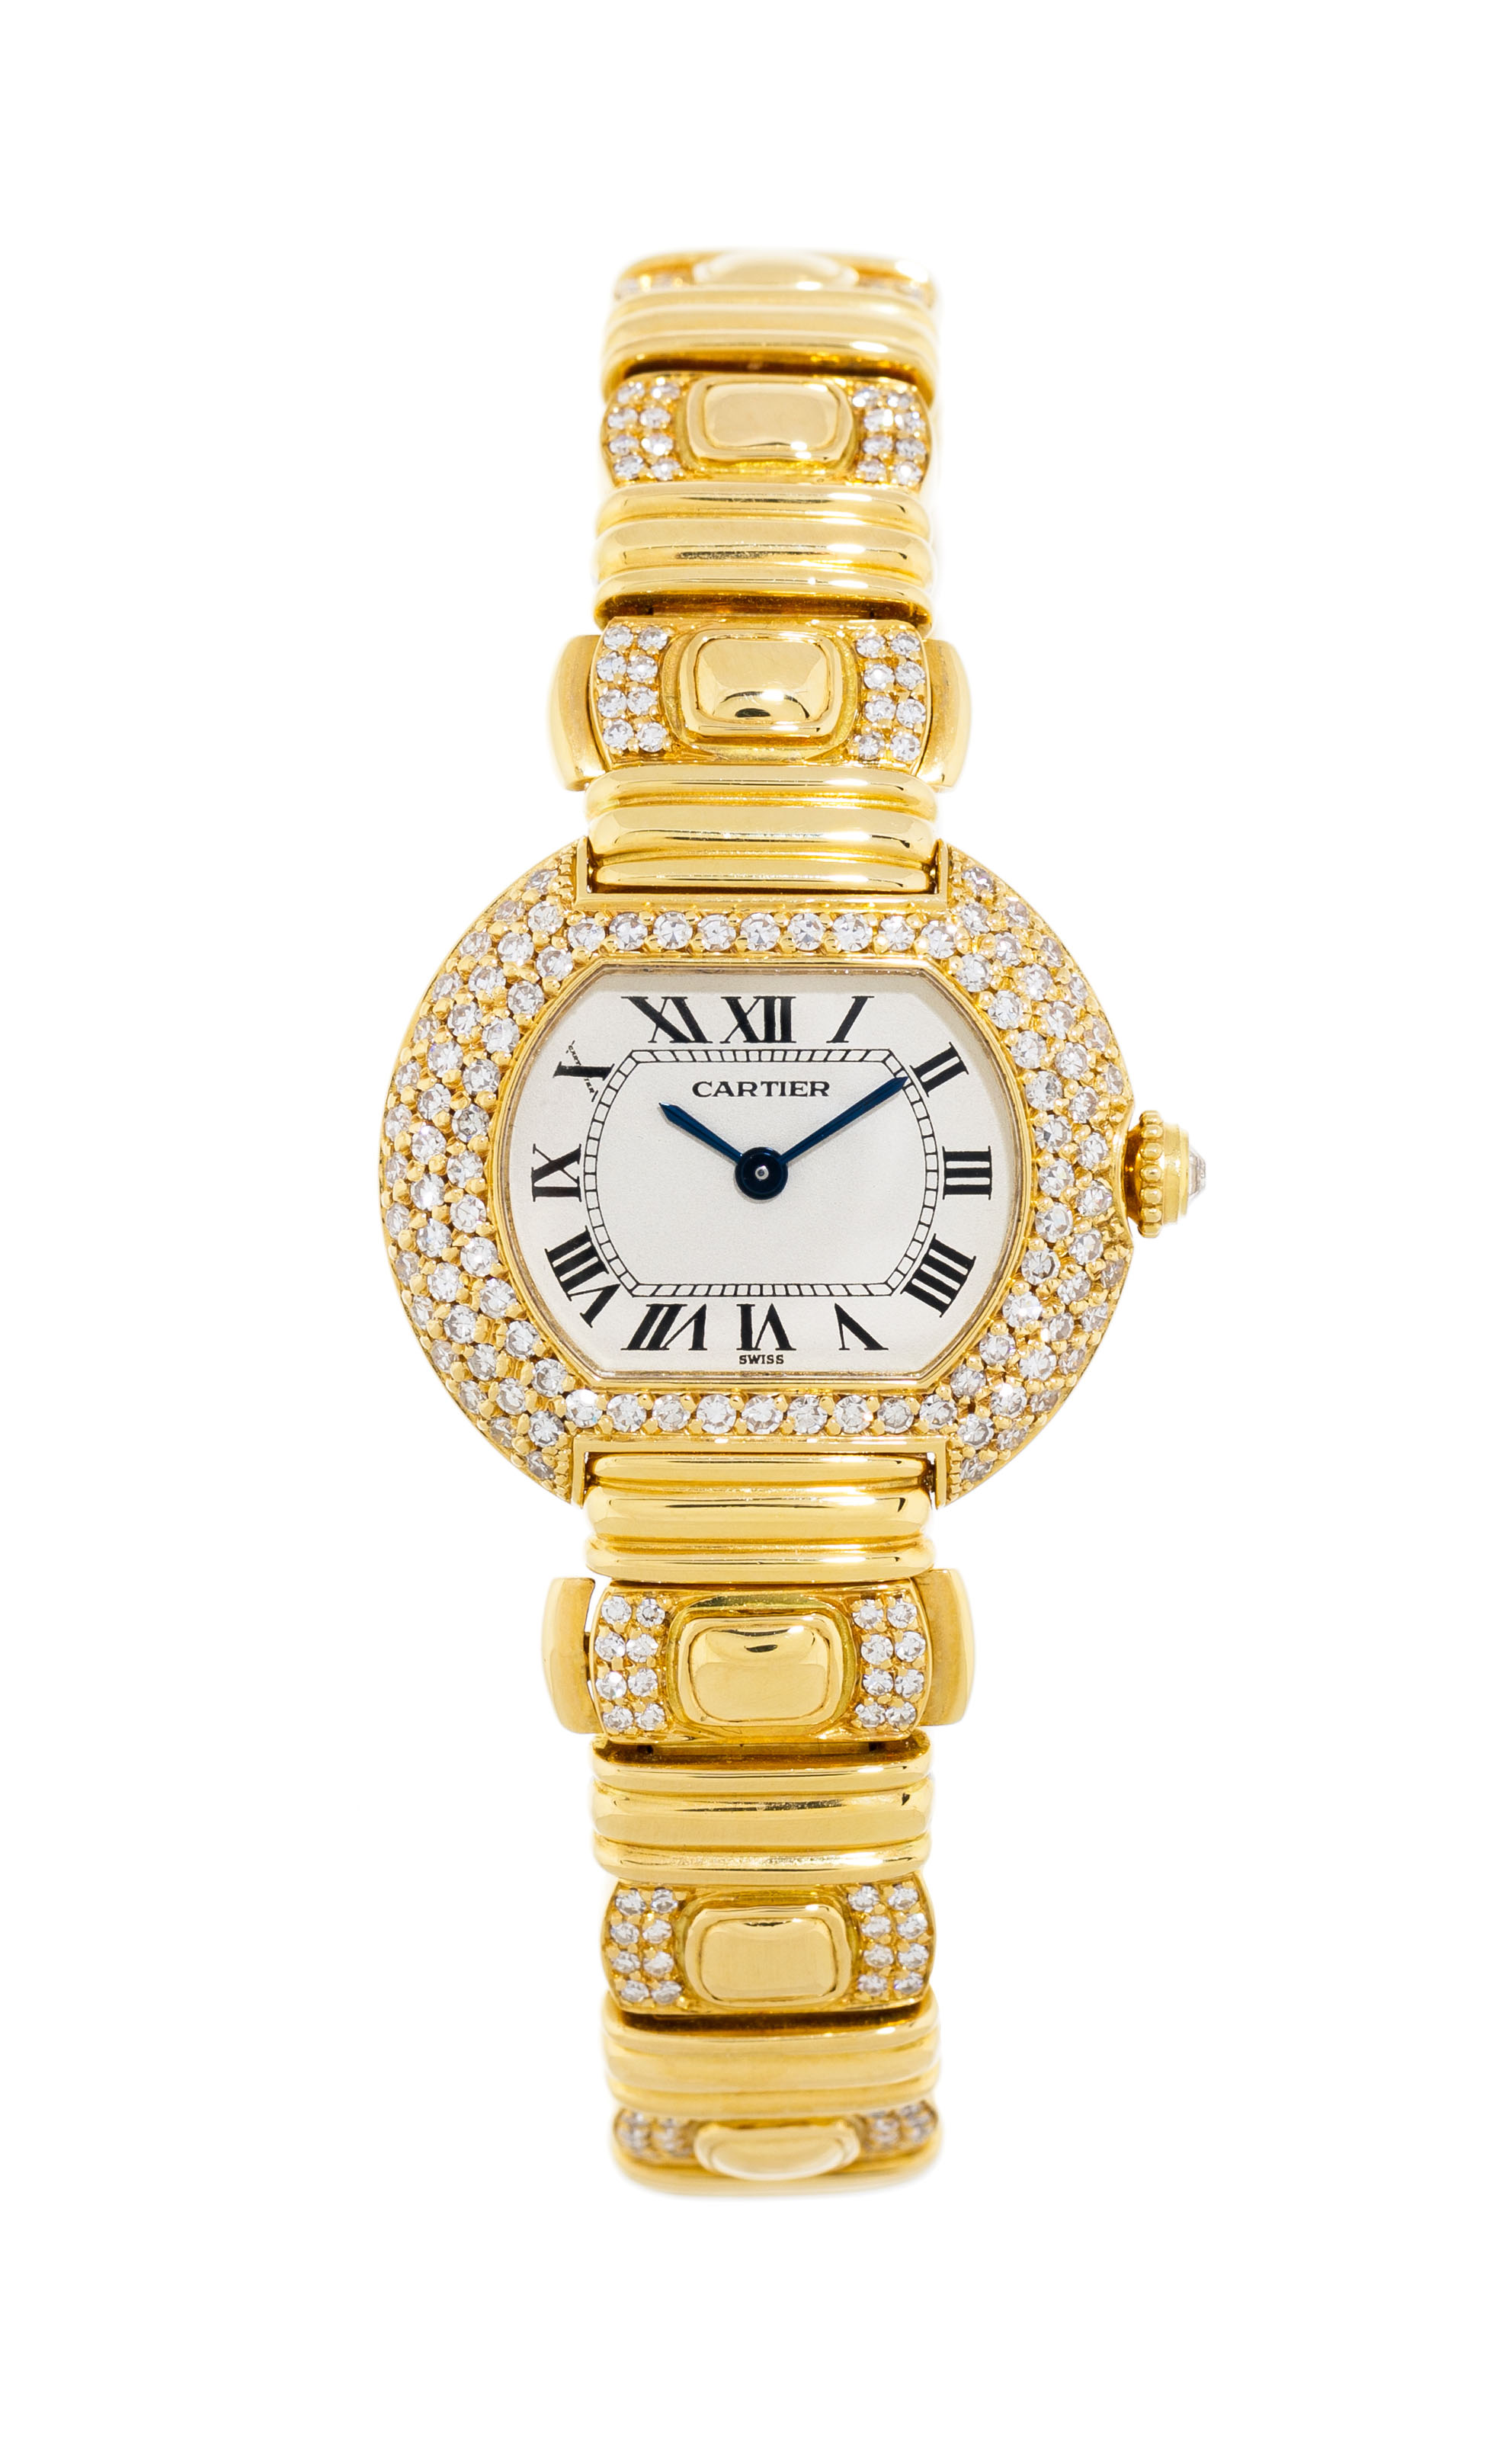 Cartier, Ellipse, montre-bracelet en or 750 sertie de diamants, transformable en bracelet